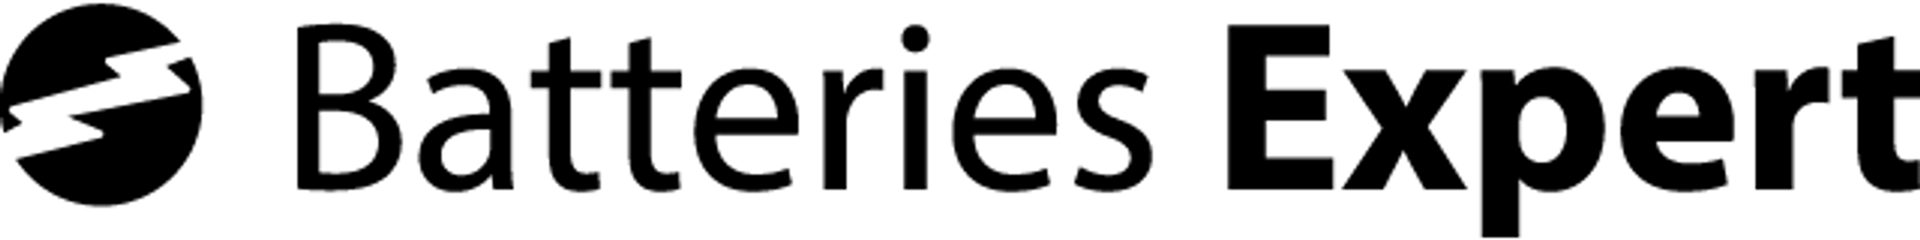 BATTERIES EXPERT logo de circulaire